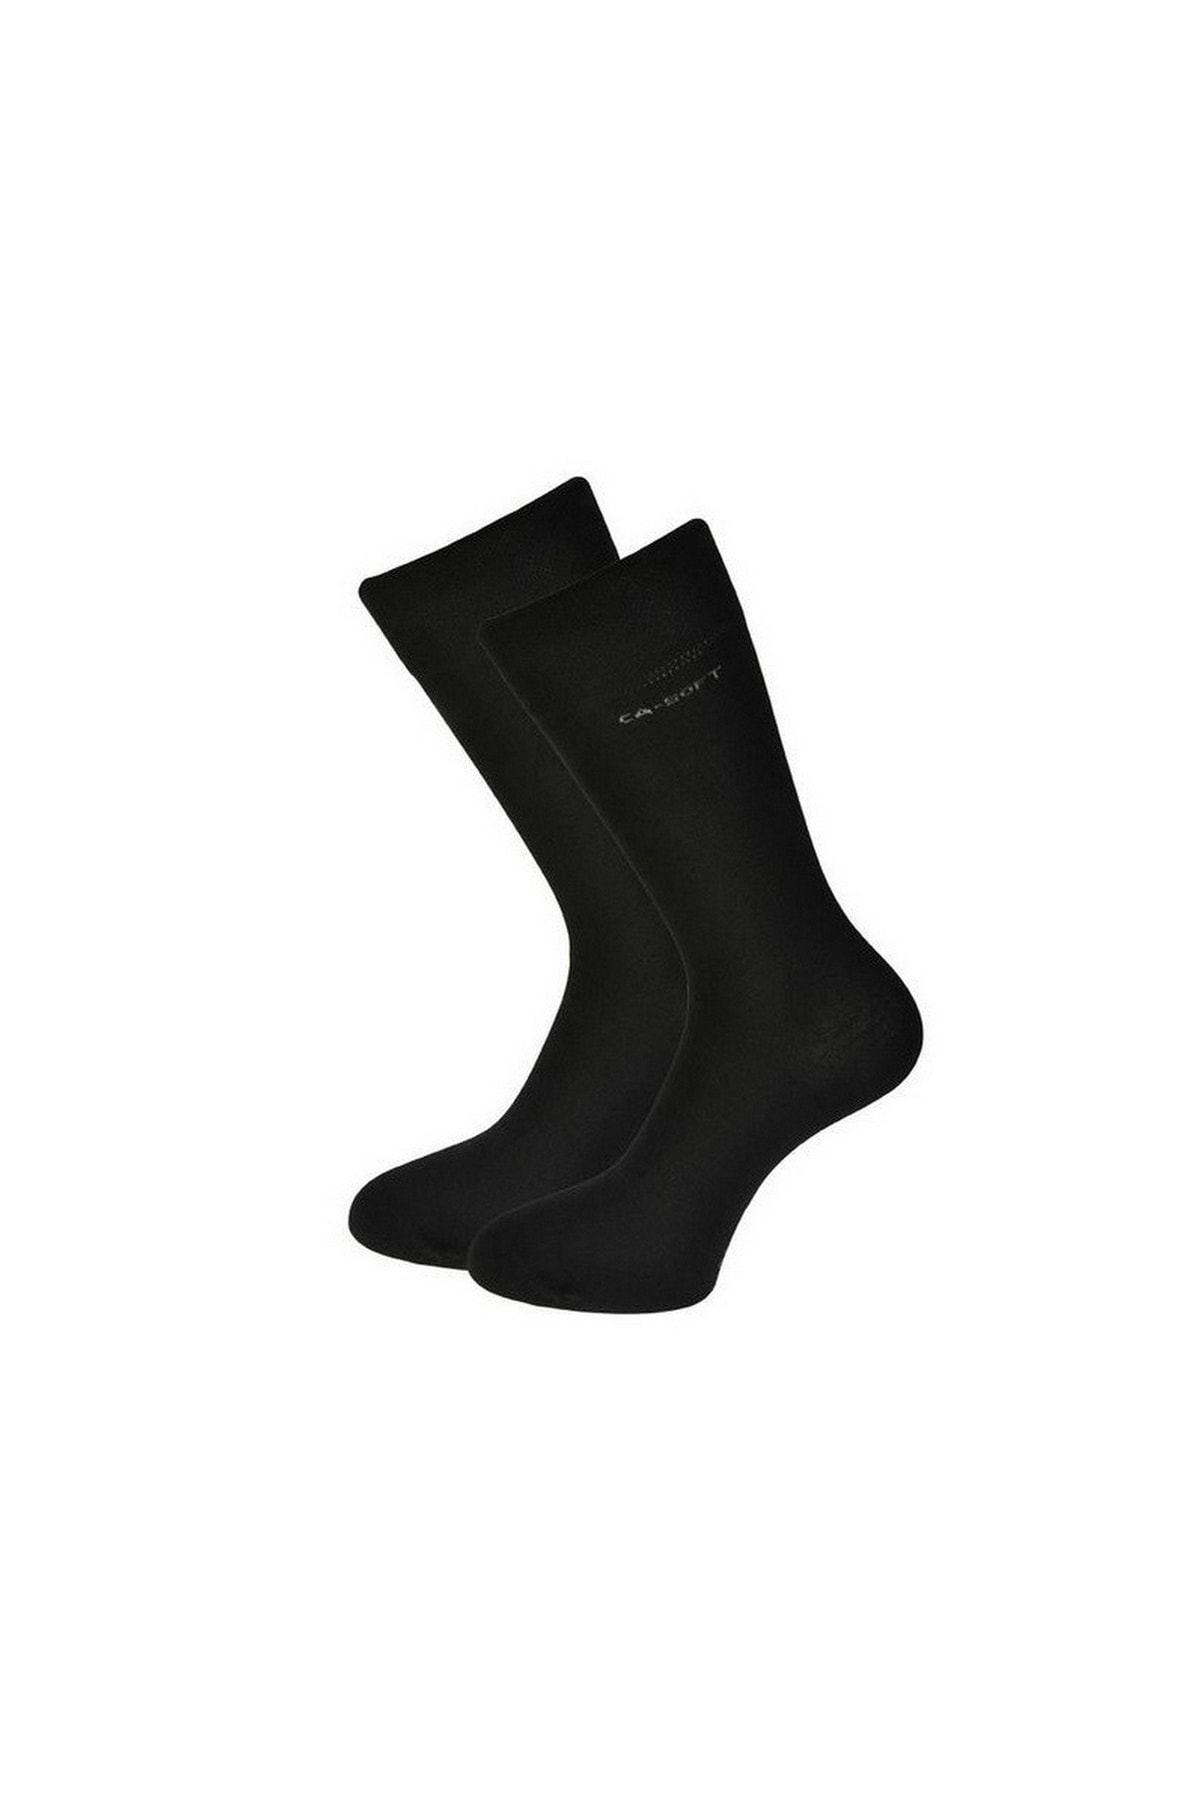 camano Socken Schwarz Casual Fast ausverkauft